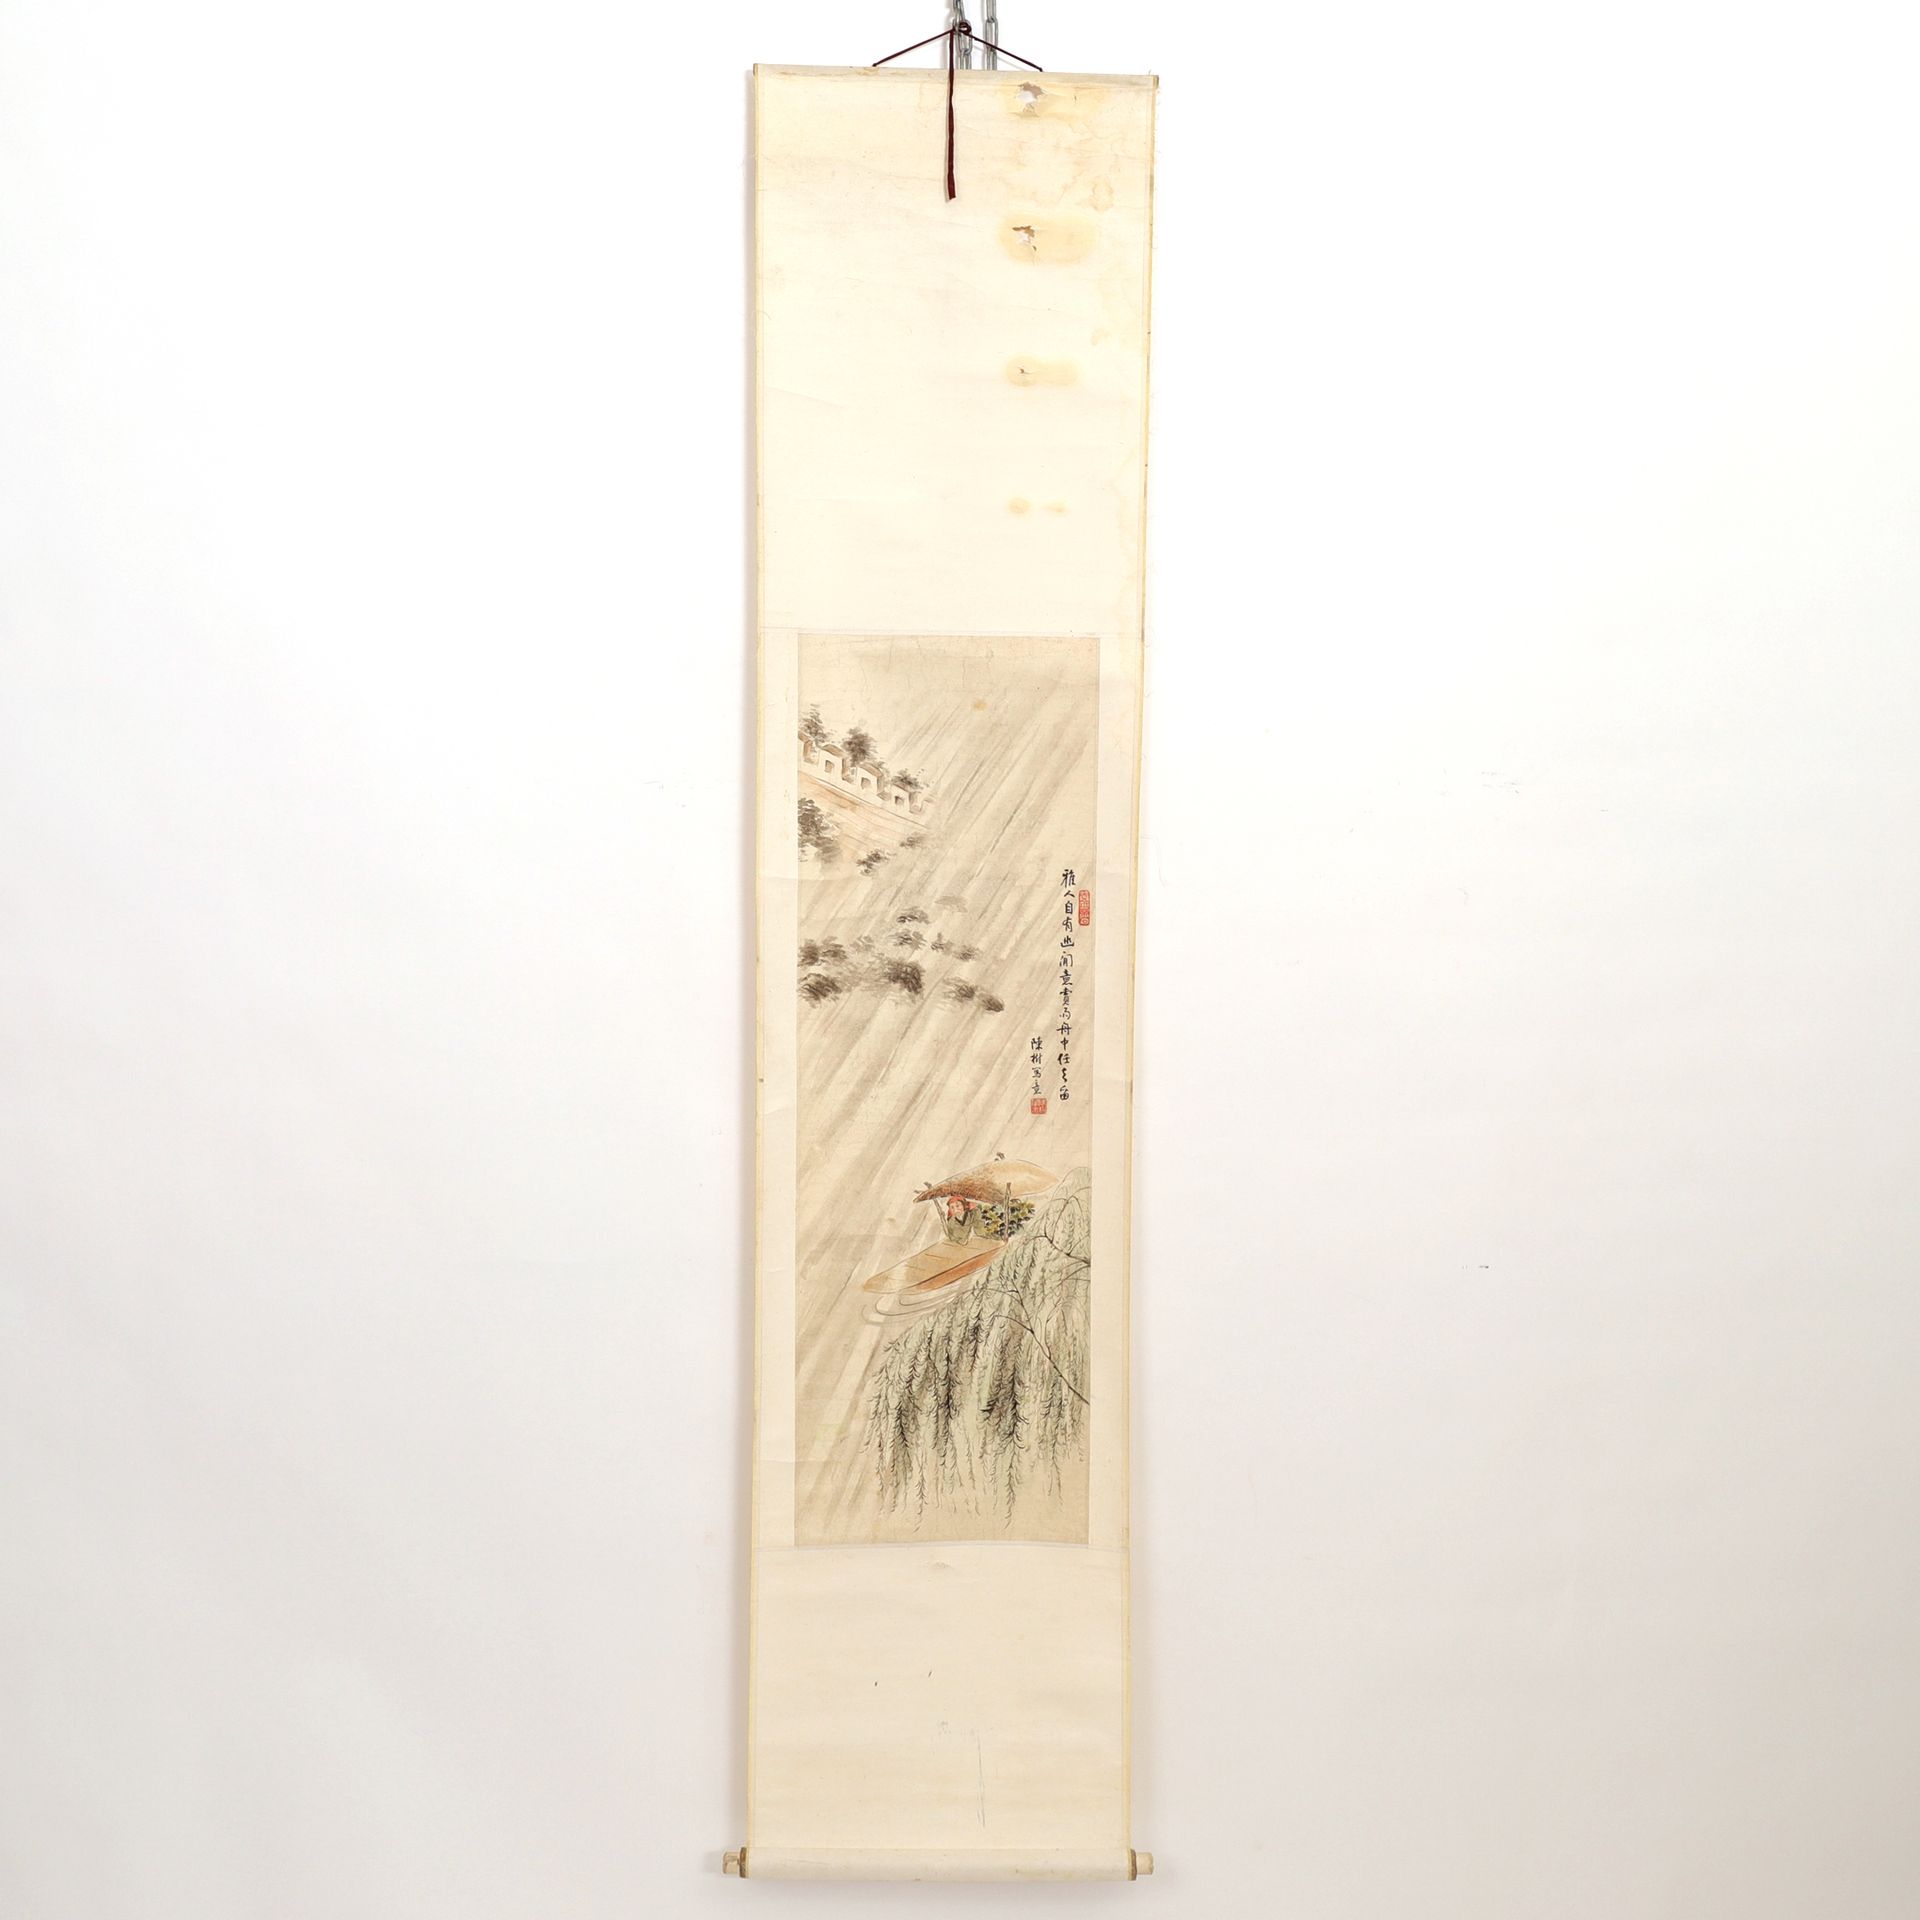 Null 纸上水墨和彩色卷轴画

描绘了一个在柳树旁乘船的人物，署名陈树，右面有印章

20世纪的中国作品

91 x 30，不含边框





专家 : Ph&hellip;